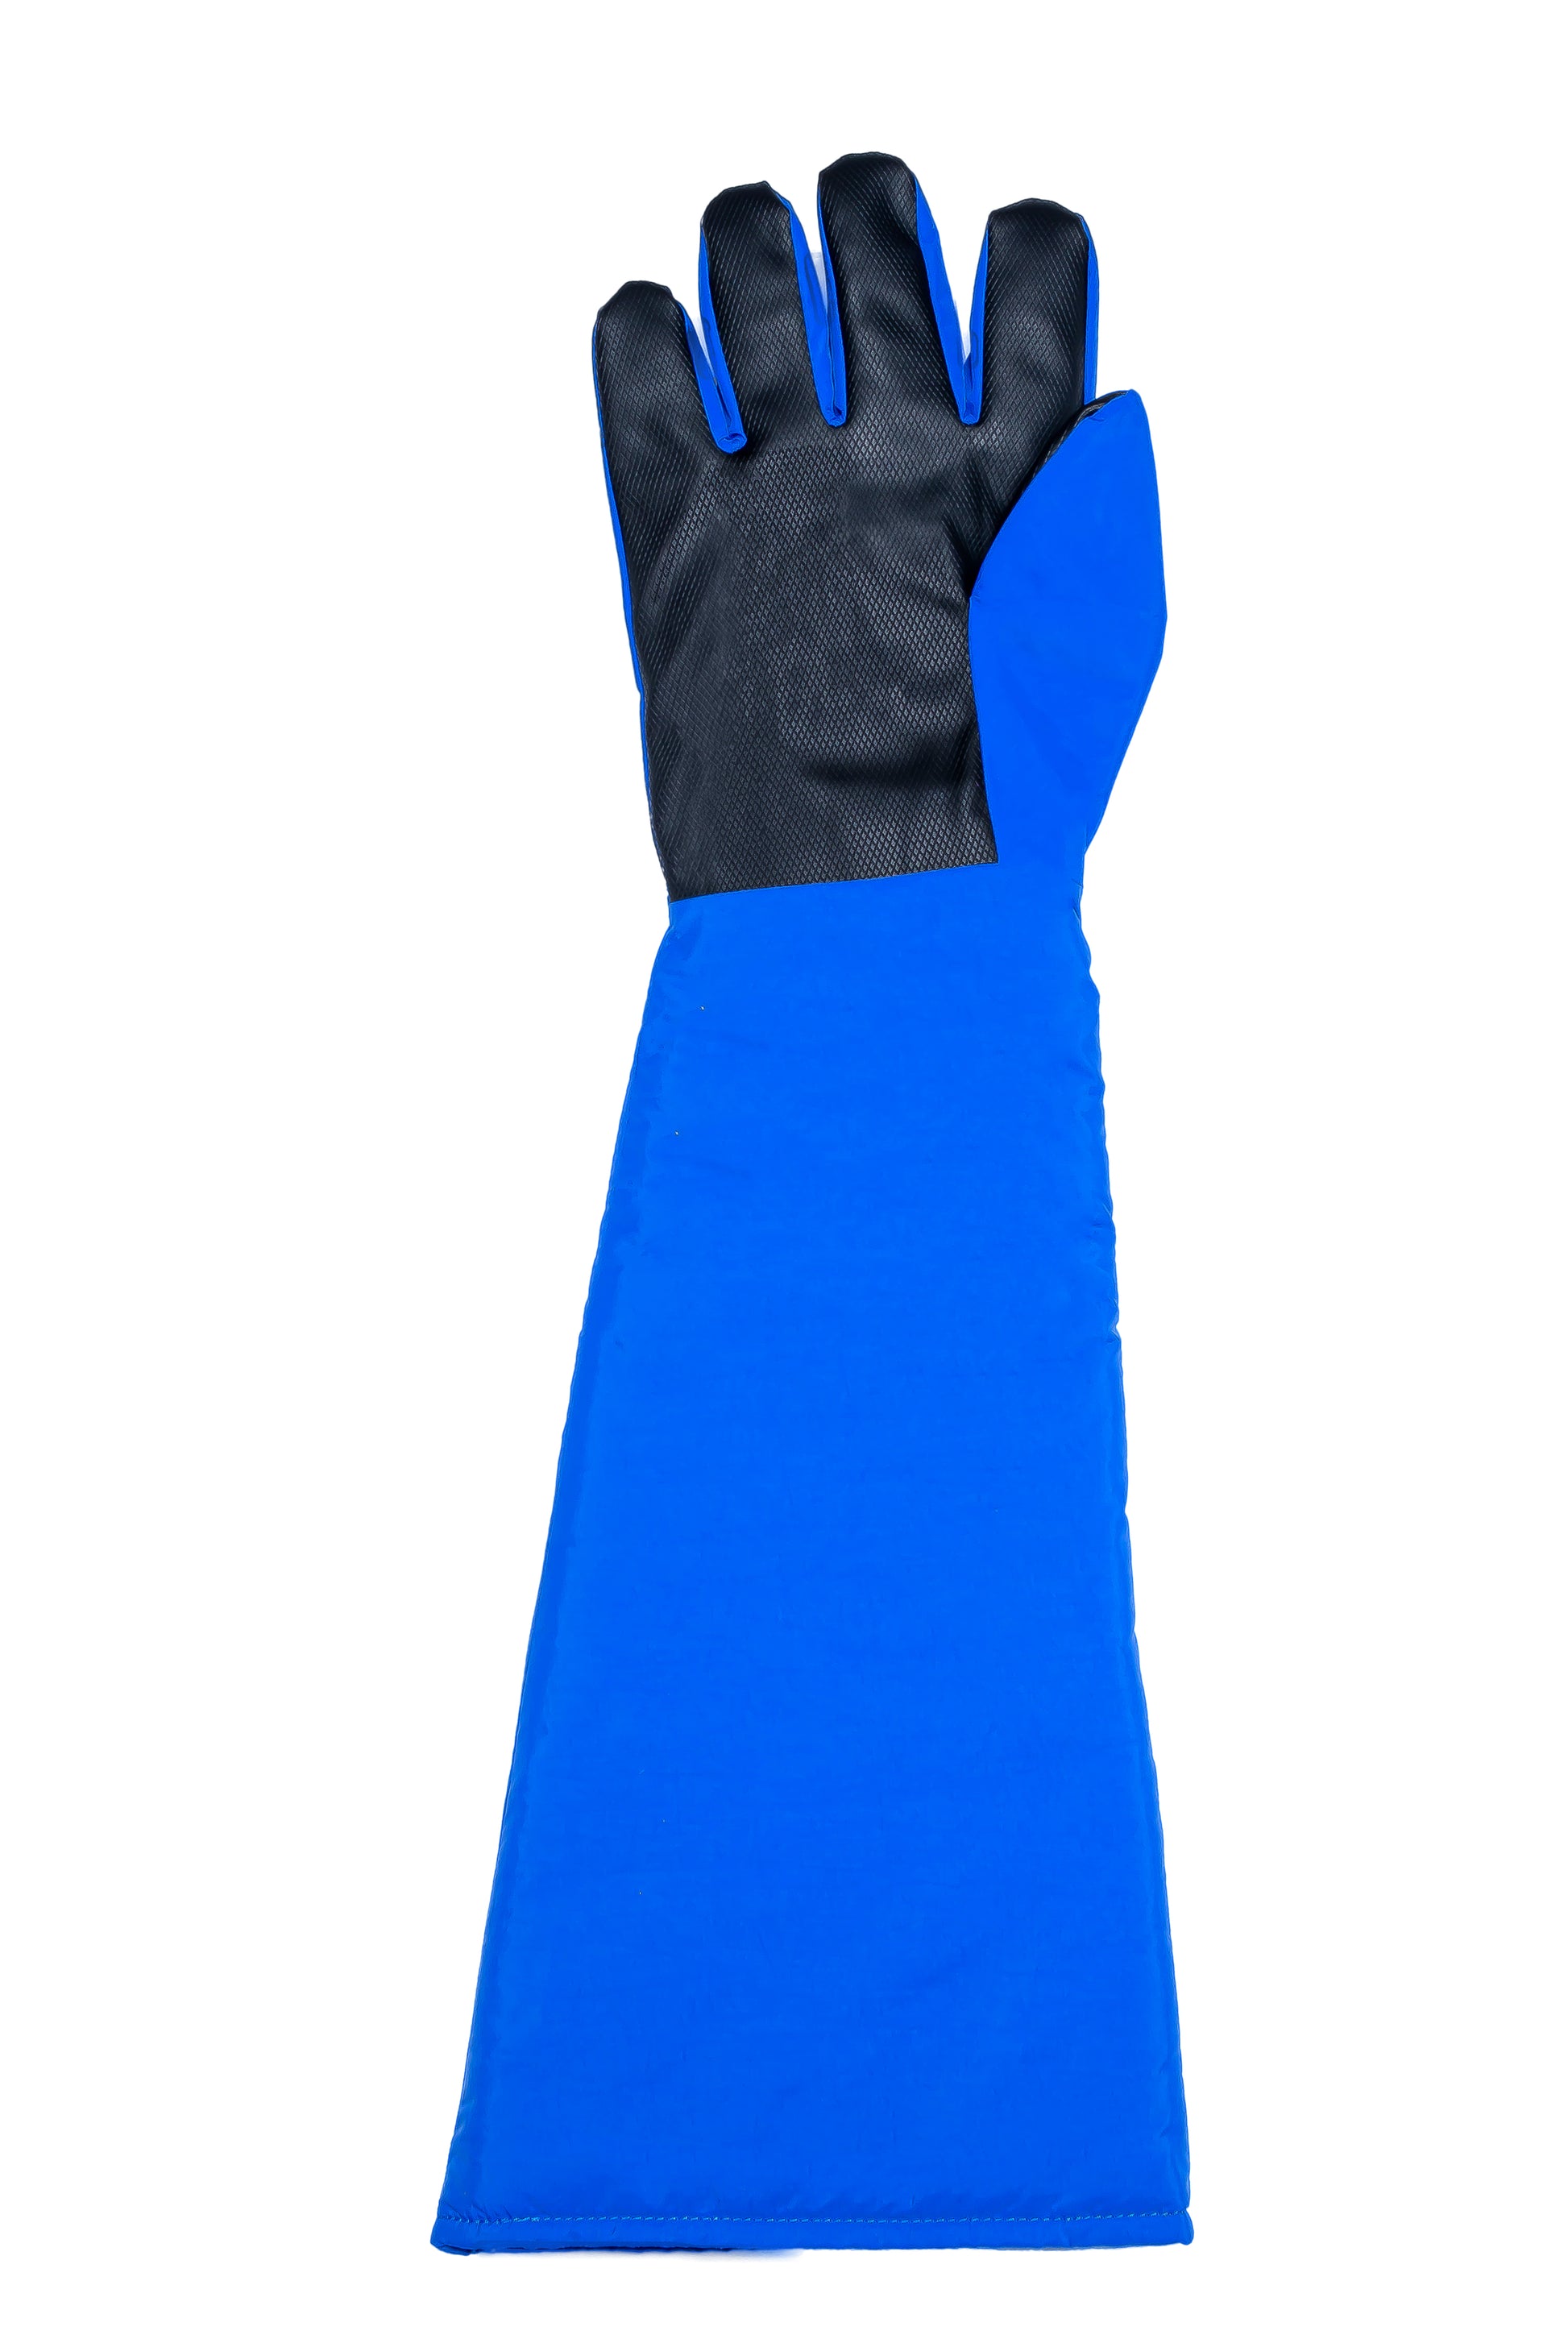 Waterproof Cryo Grip Gloves Shoulder - GERF® Certified Safety Gloves